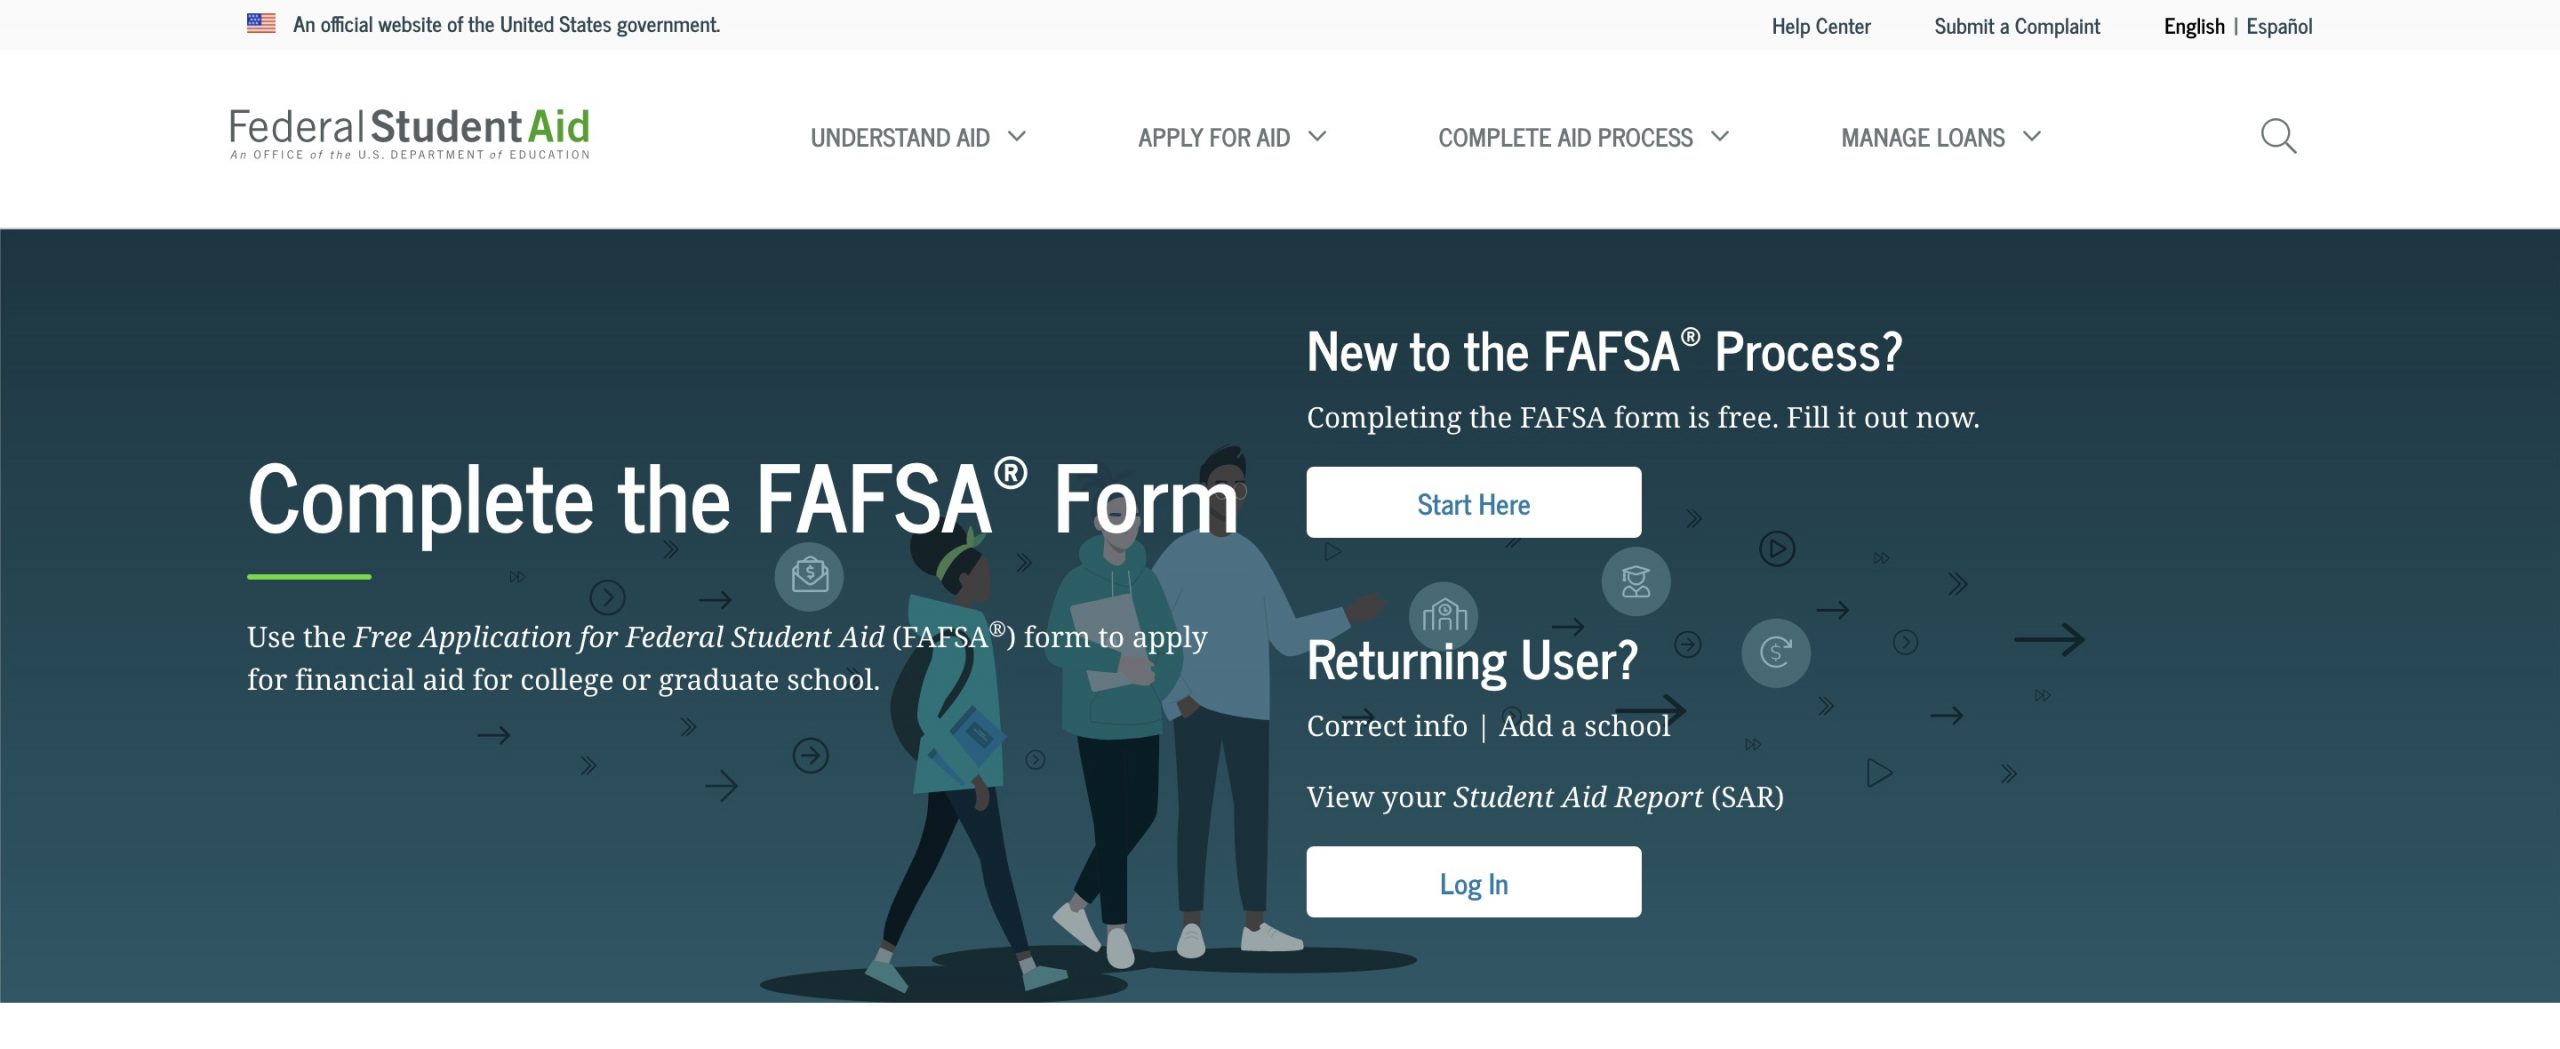 fasfa form online website